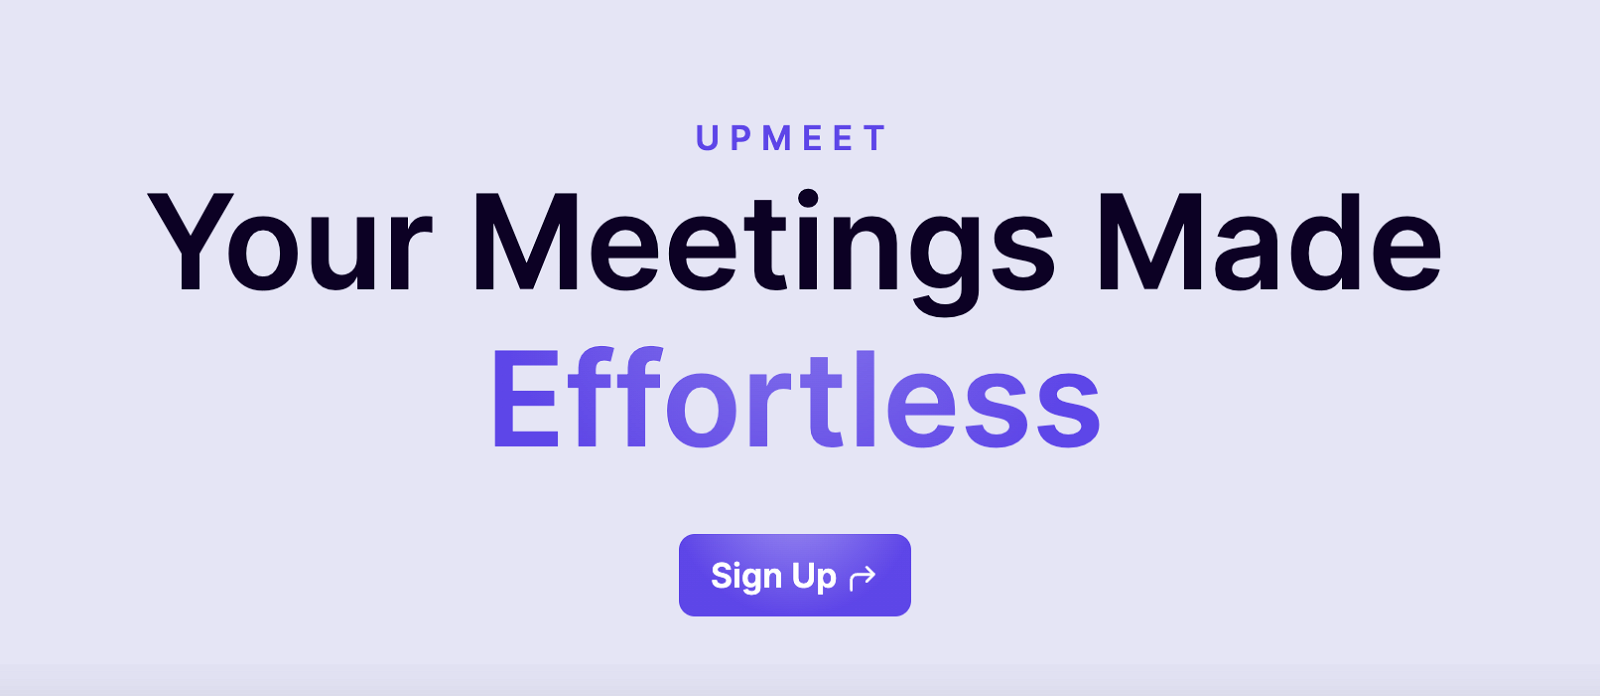 30% off upmeet.me video meeting software